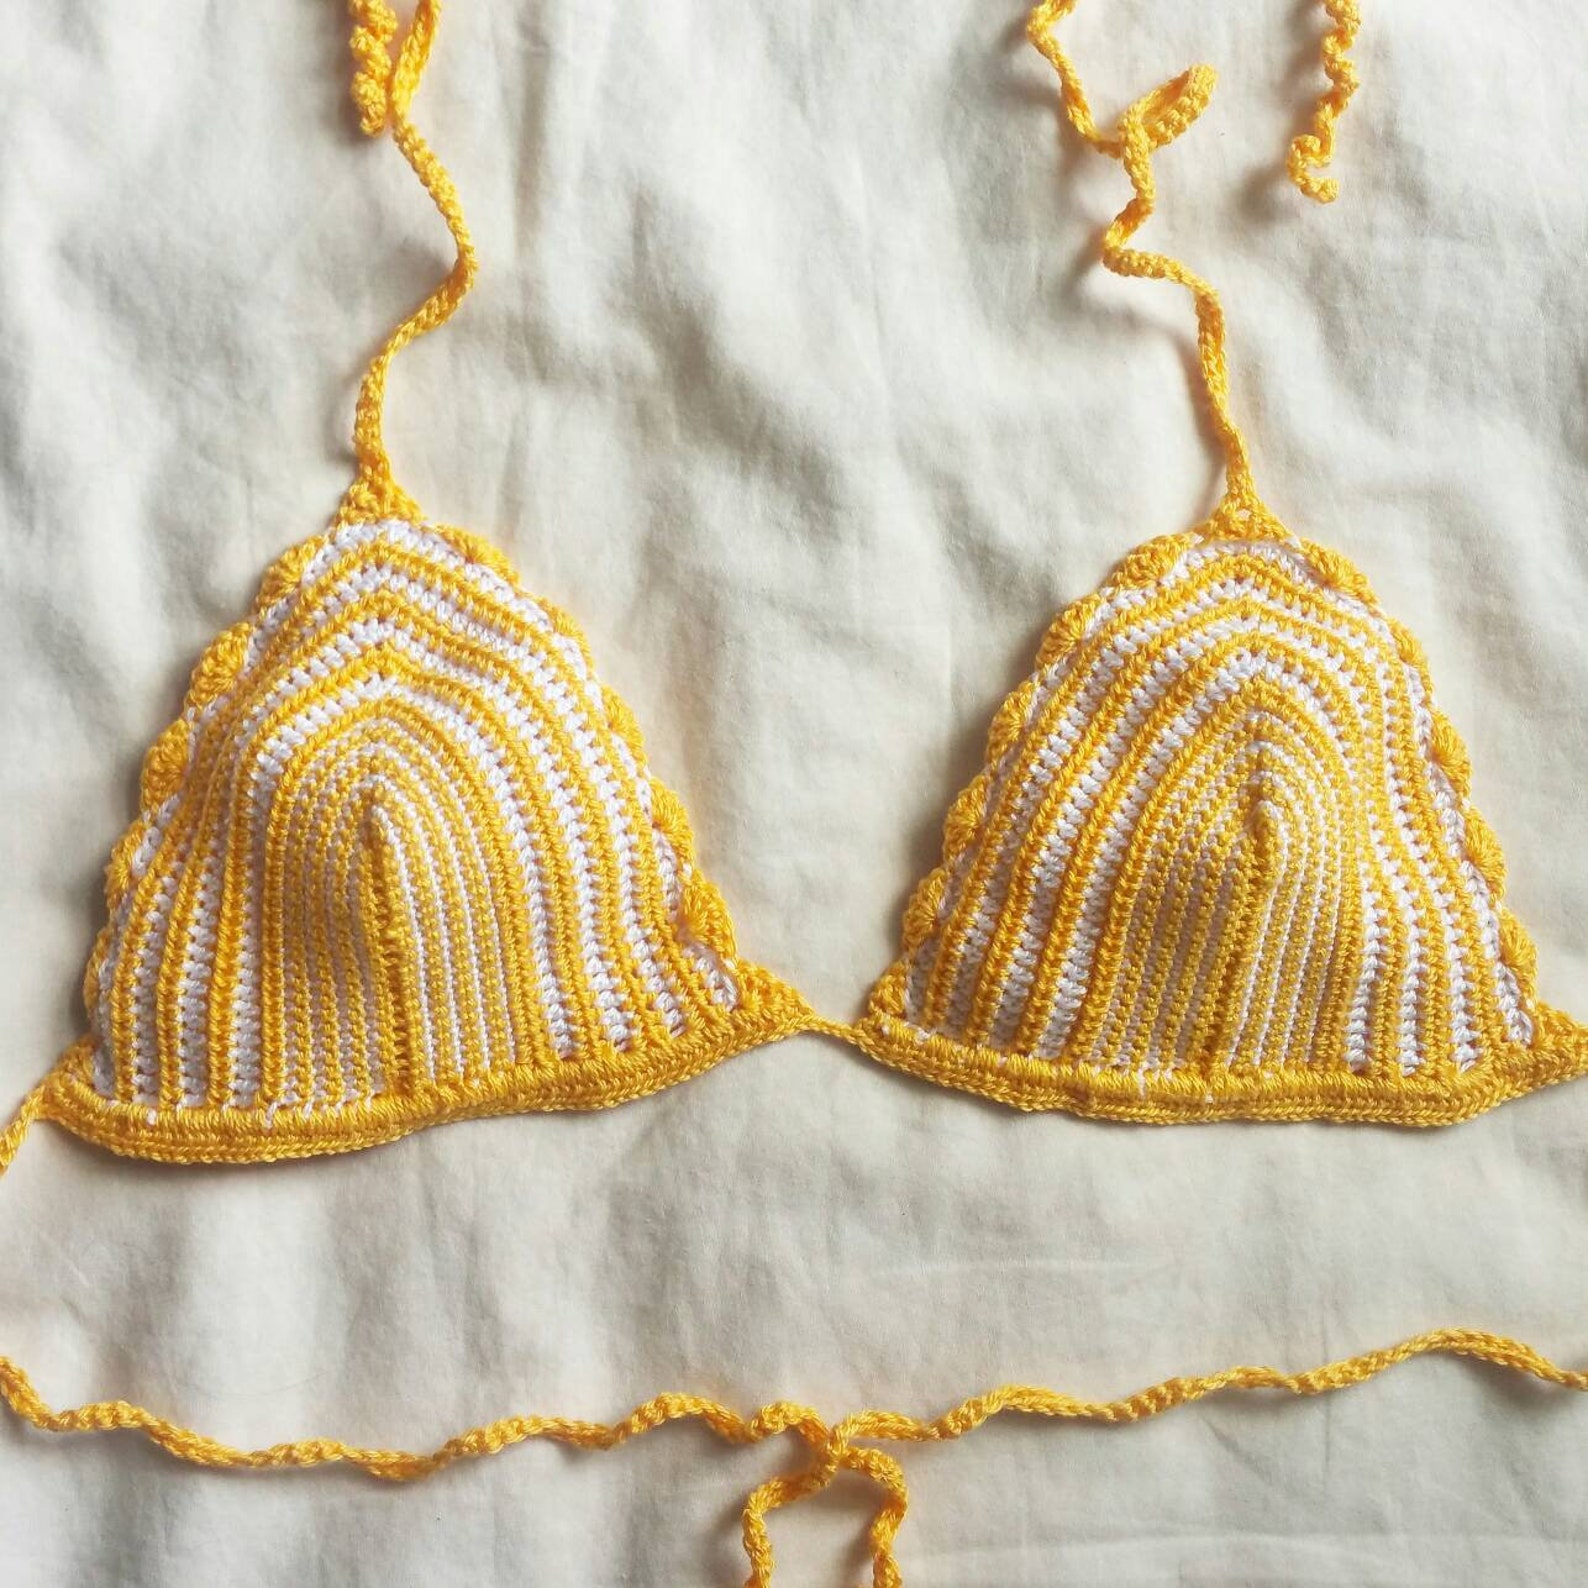 Women's crochet bikini / bikini top / yellow and white | Etsy